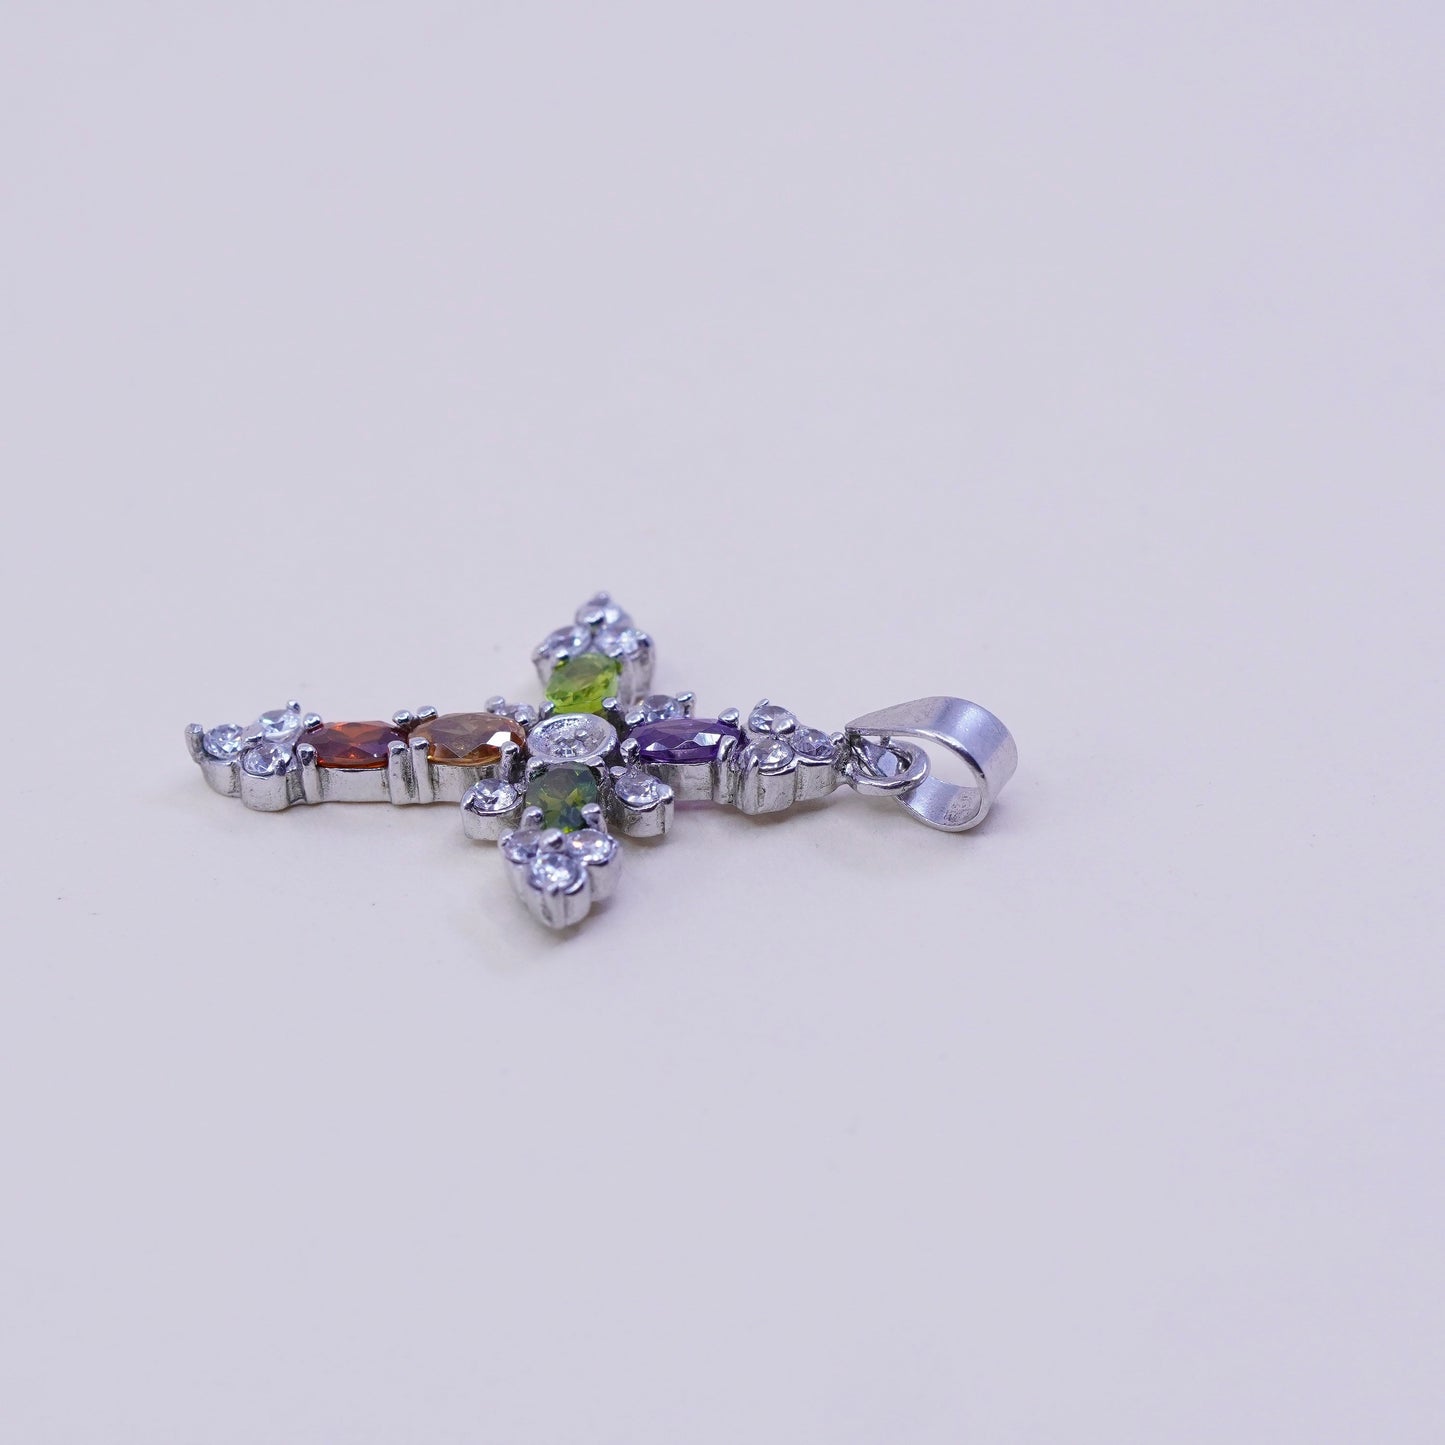 Vintage Sterling 925 silver handmade cross pendant with peridot amethyst